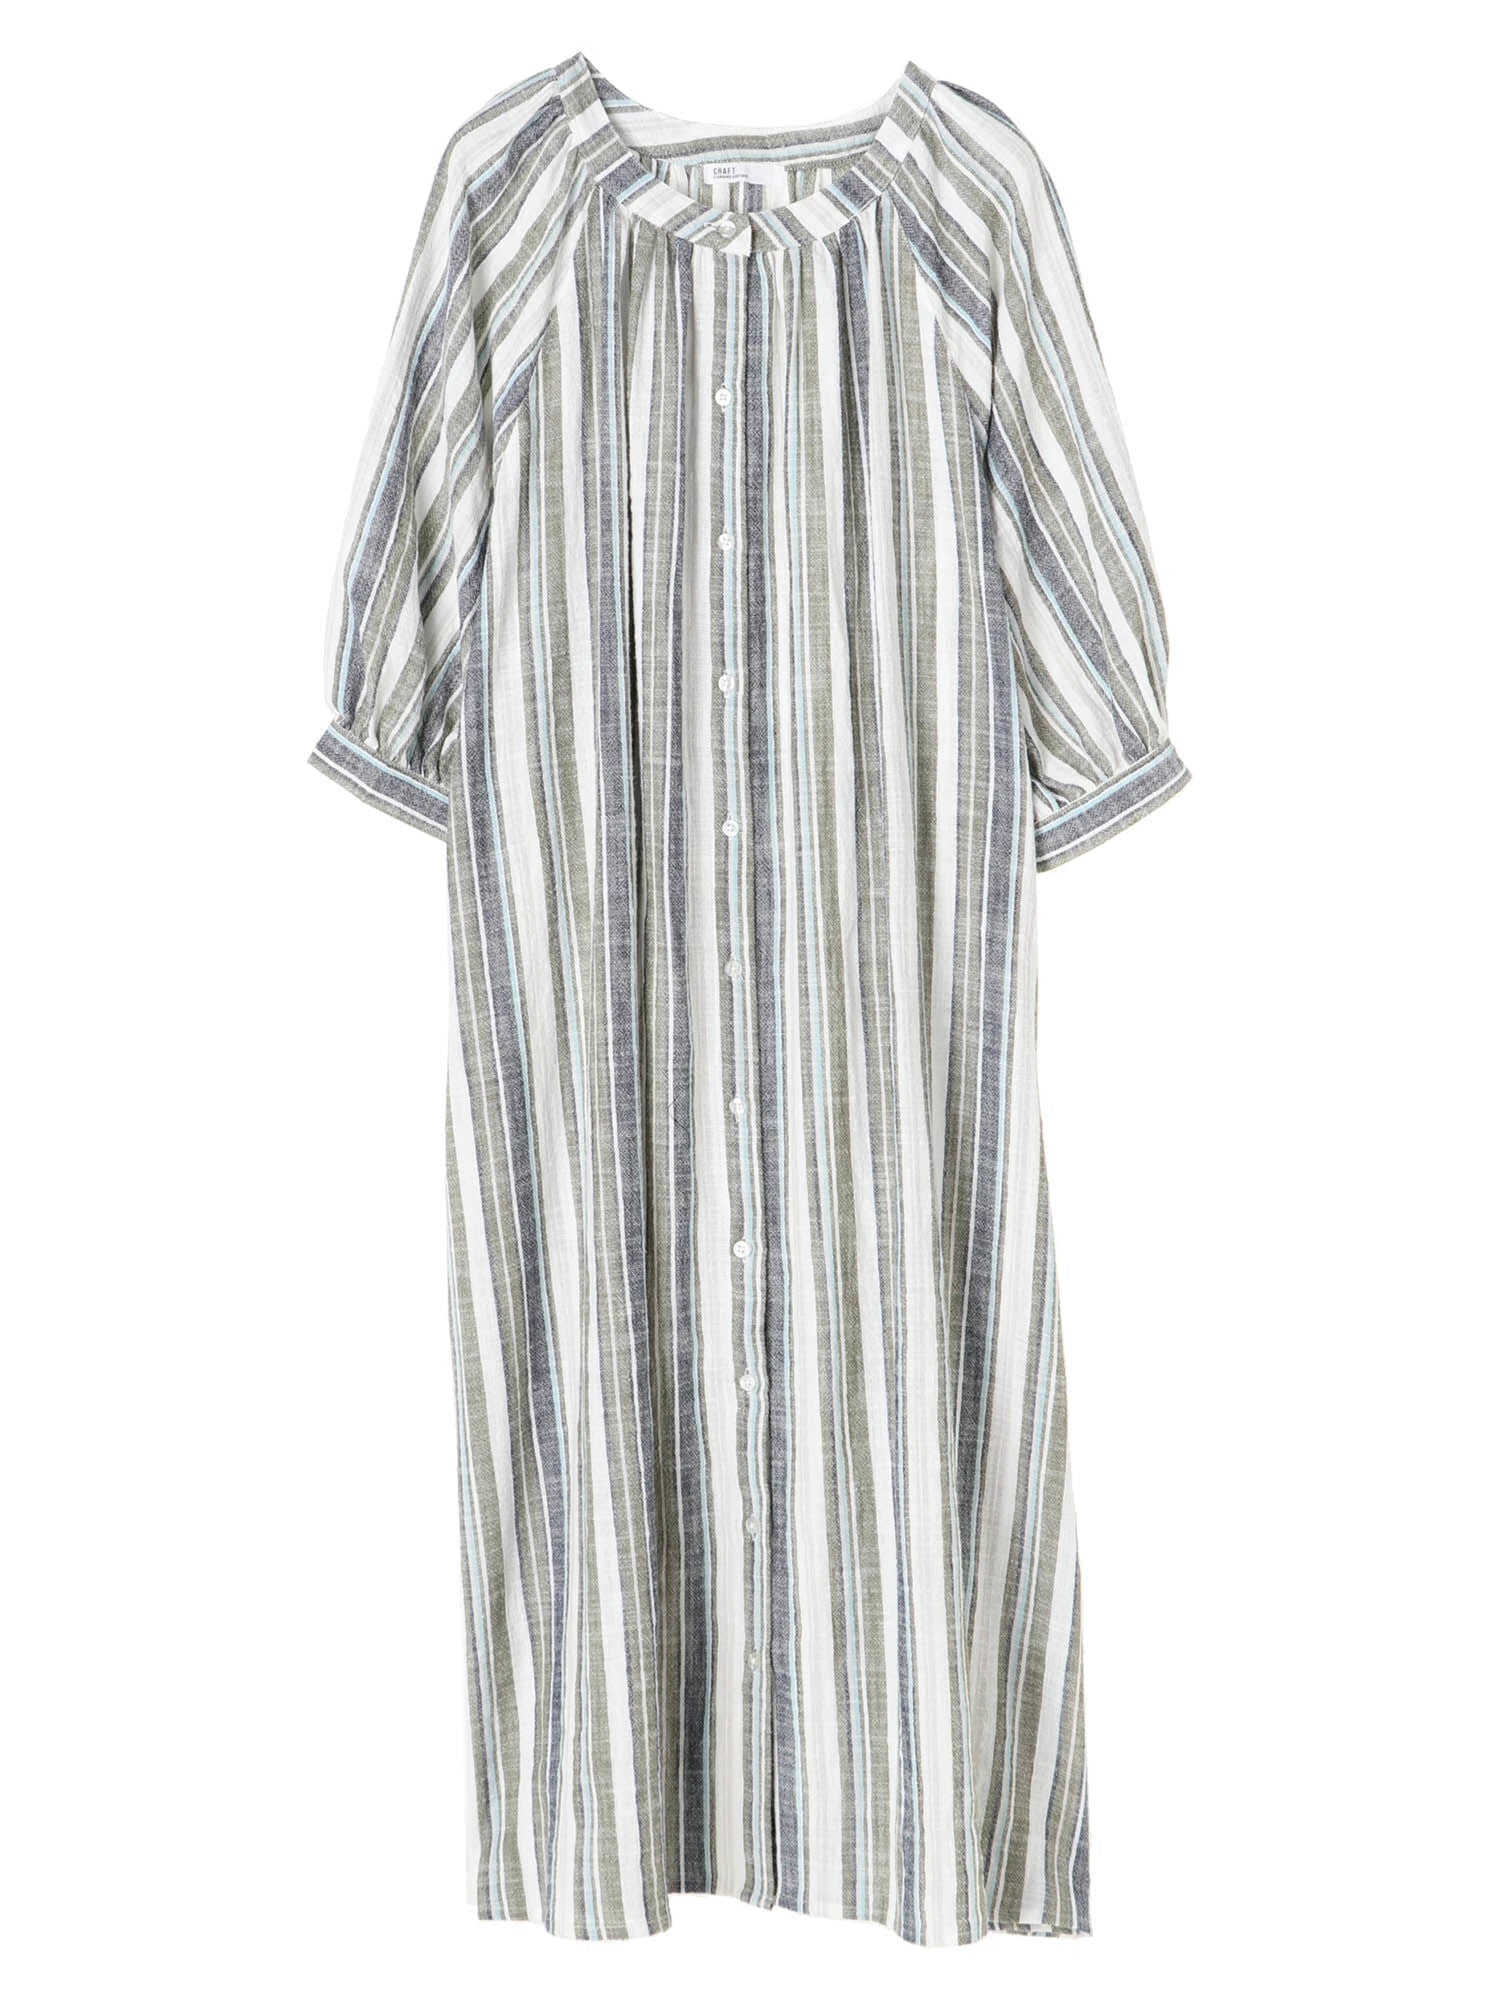 Kana Striped Dress